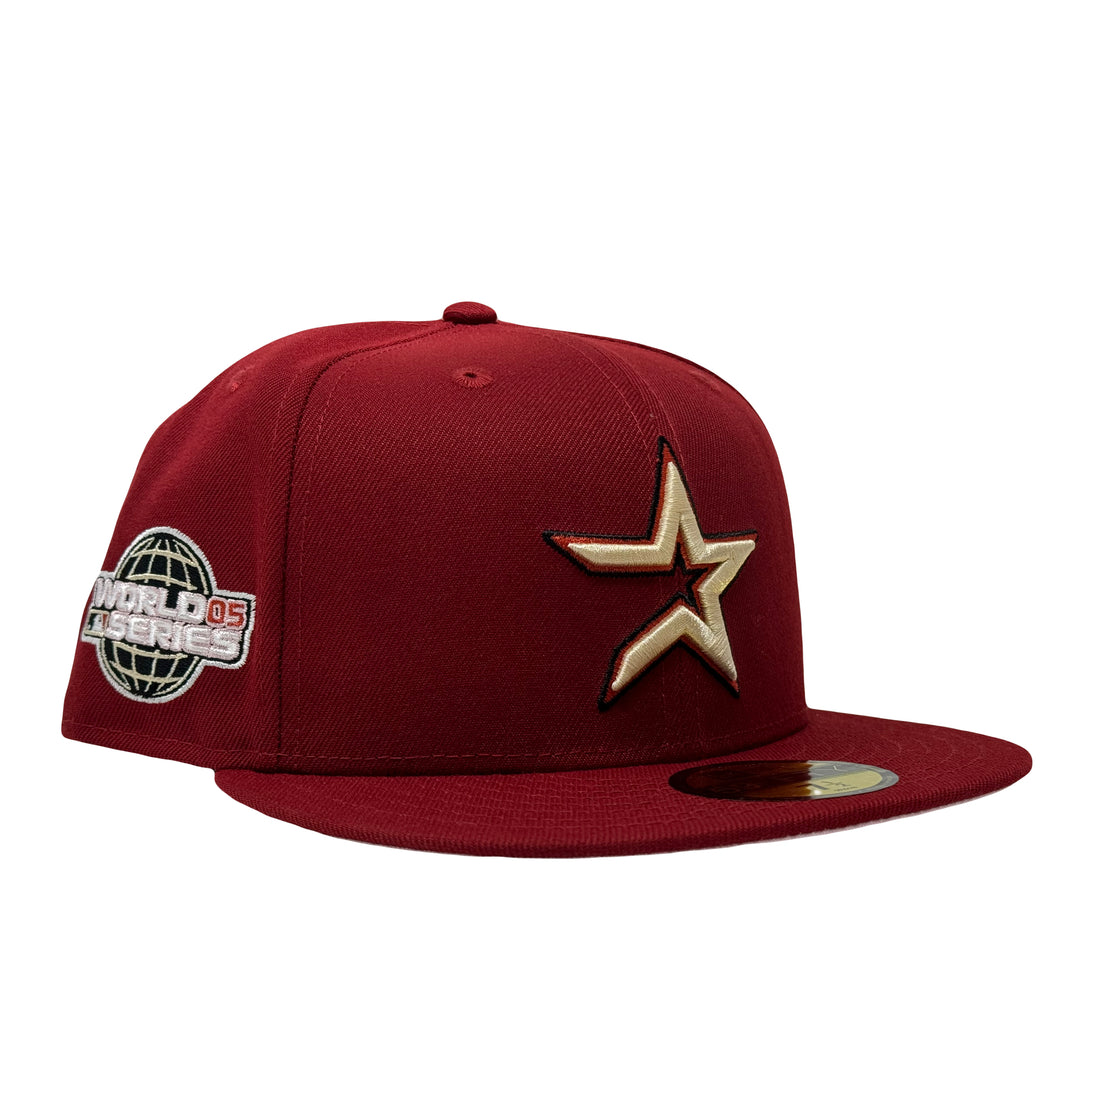 Houston Astros 2005 World Series Brick Red Pink Brim New Era Fitted Hat